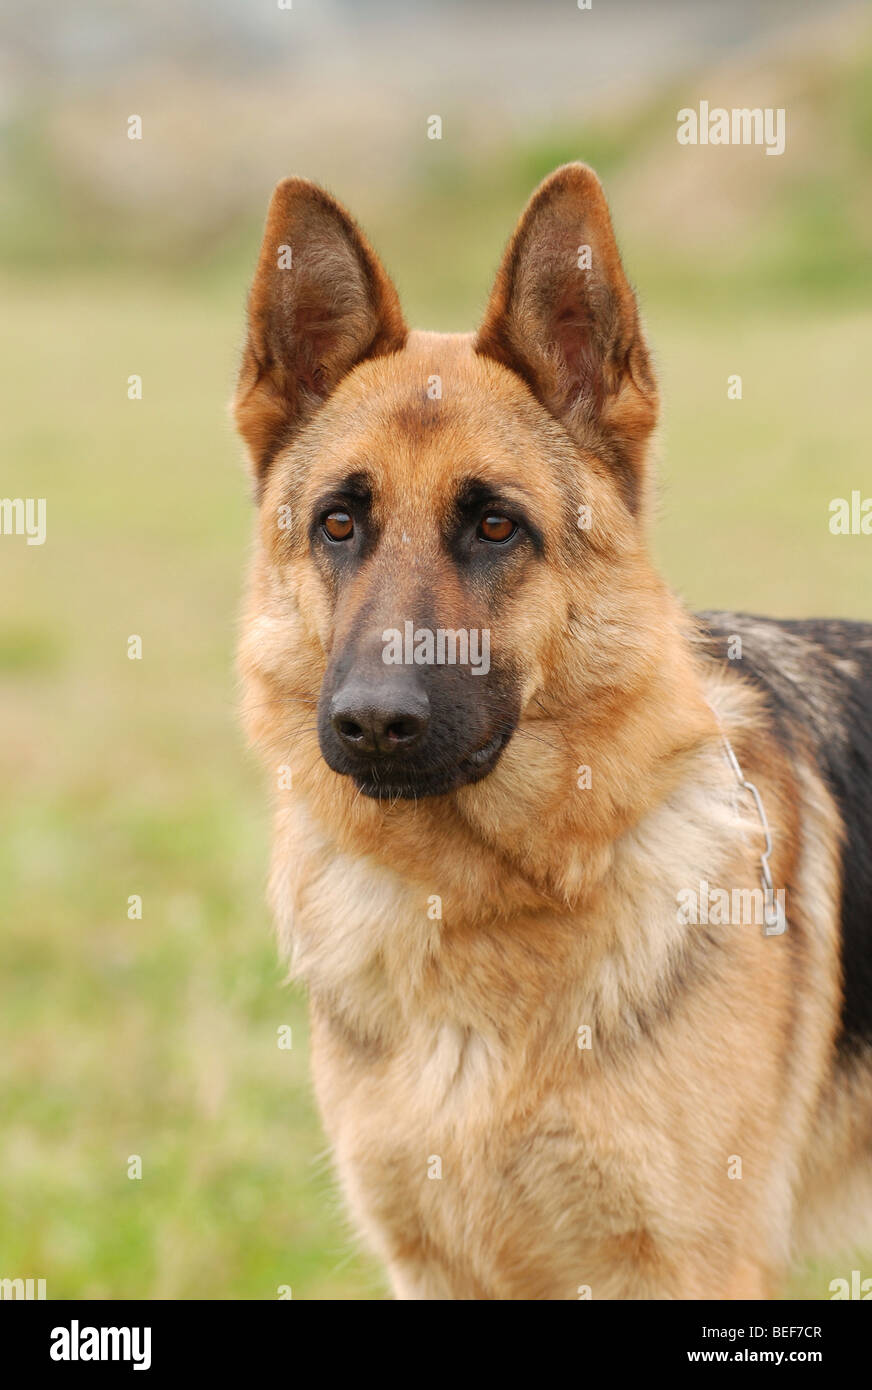 German shepherd dog portrait in garden Stock Photo